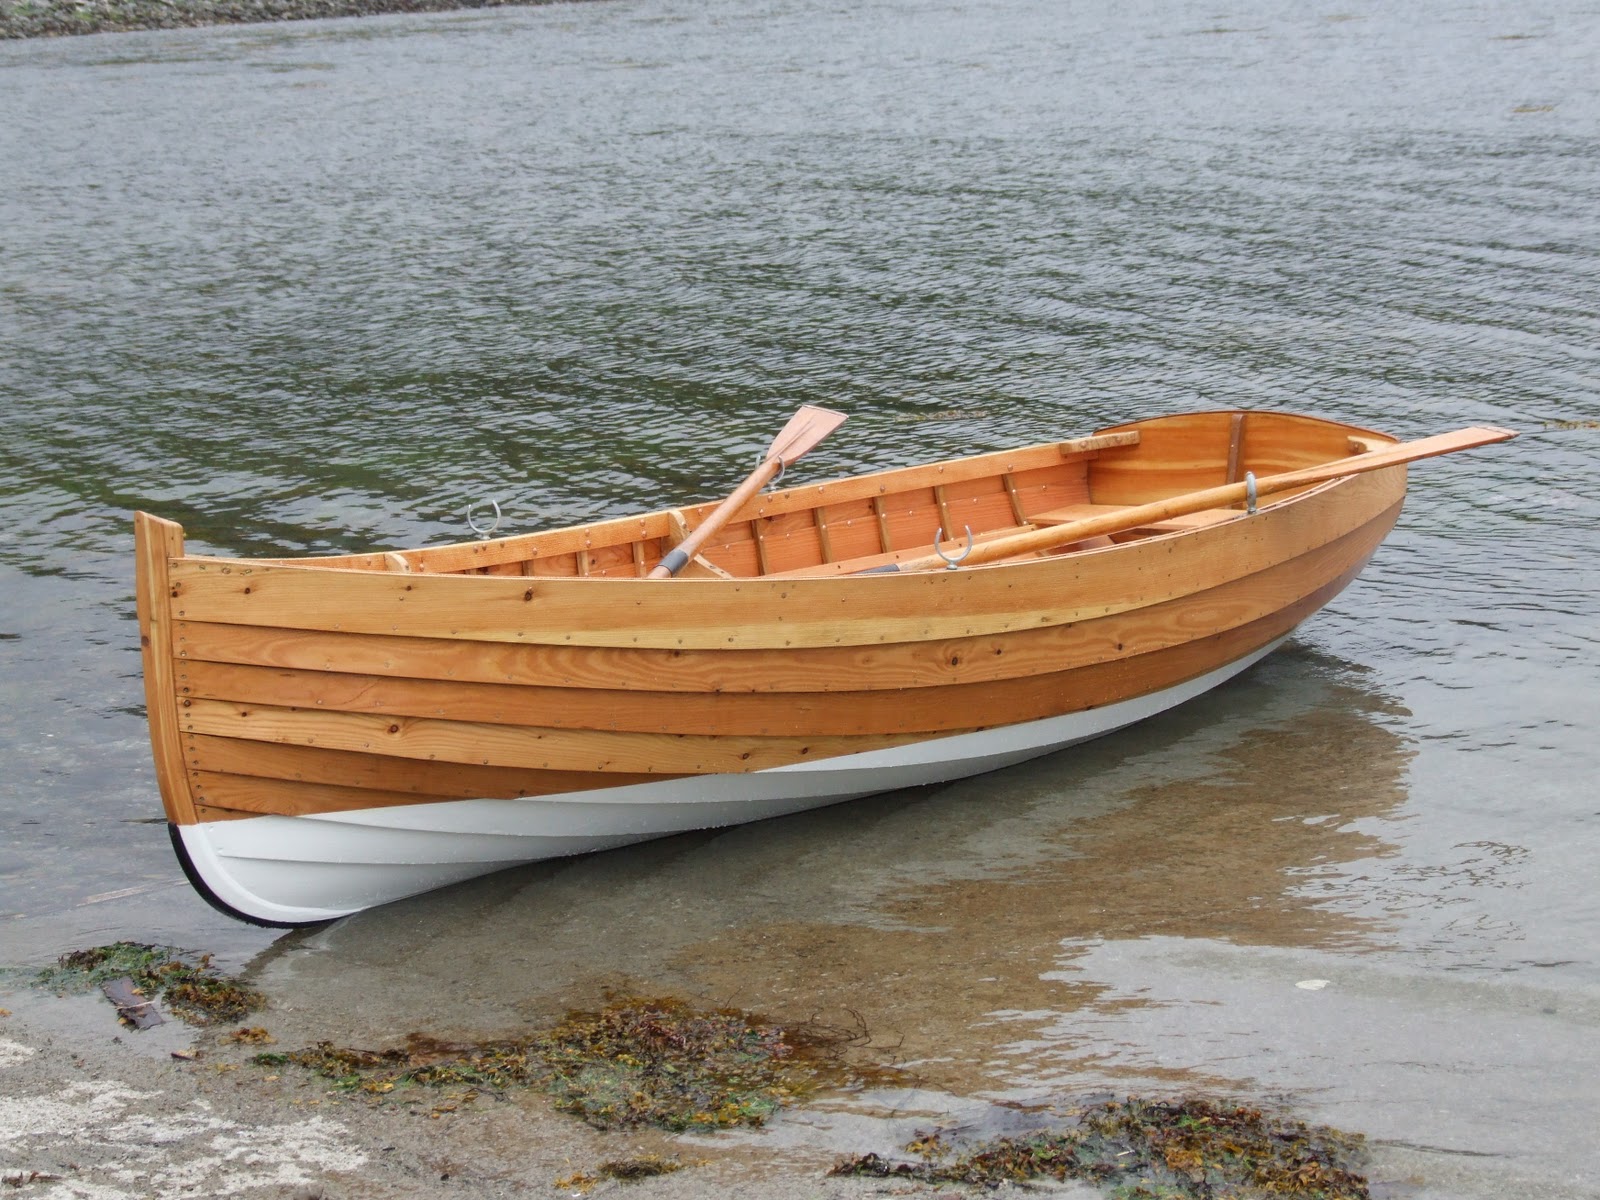 Viking Boats of Ullapool: Tom's Rules of Thumb